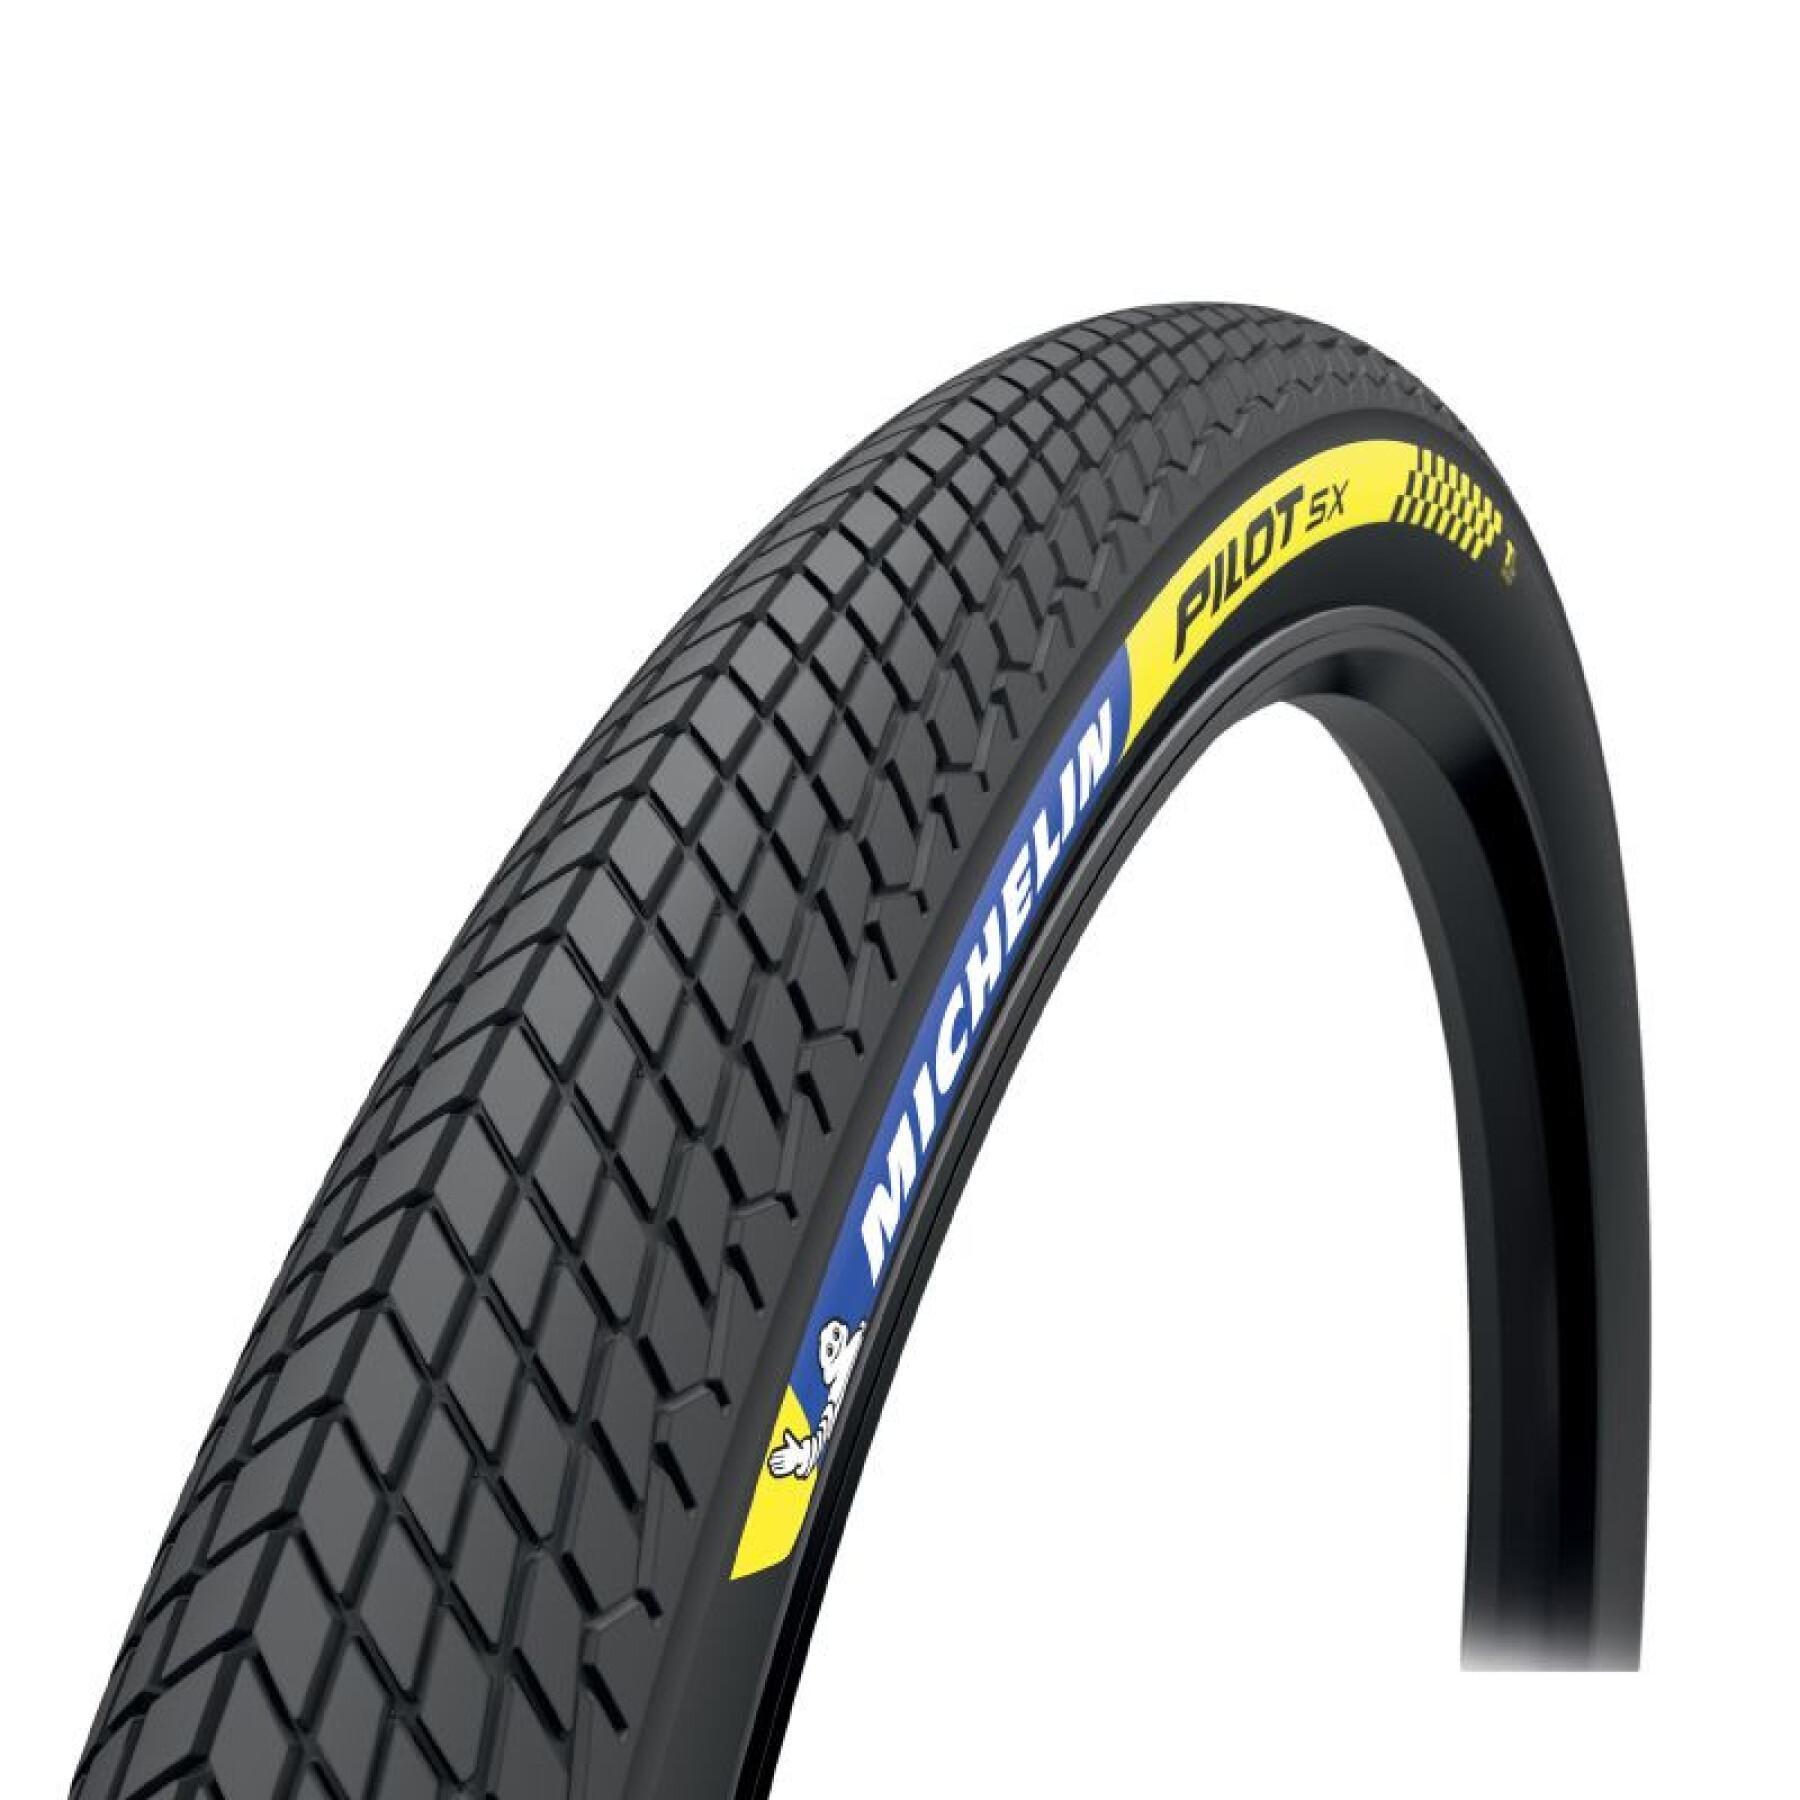 Tubeless competition tire Michelin Bmx Michelin Pilot Sx Ts (44-406) Ready